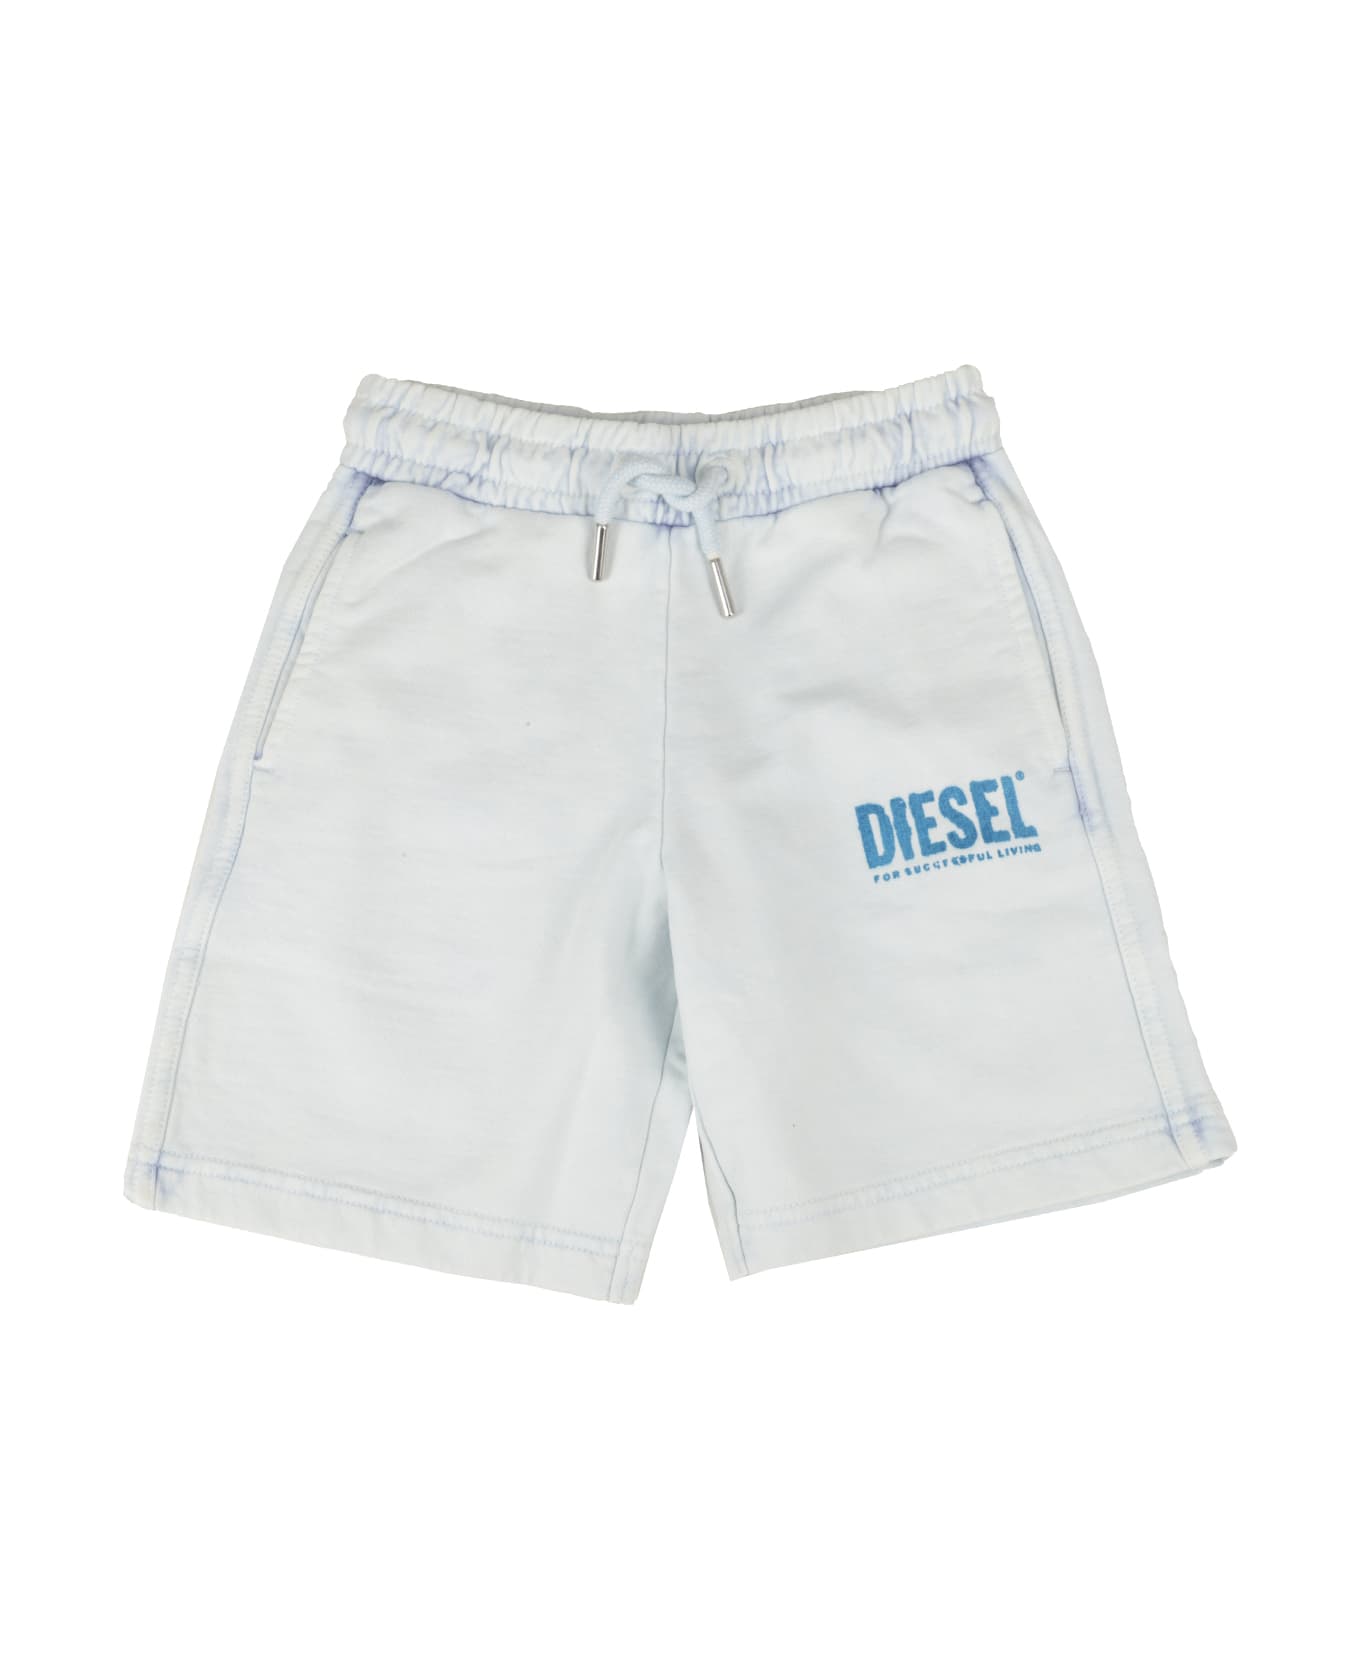 Diesel Pferty - G Bianco Blu